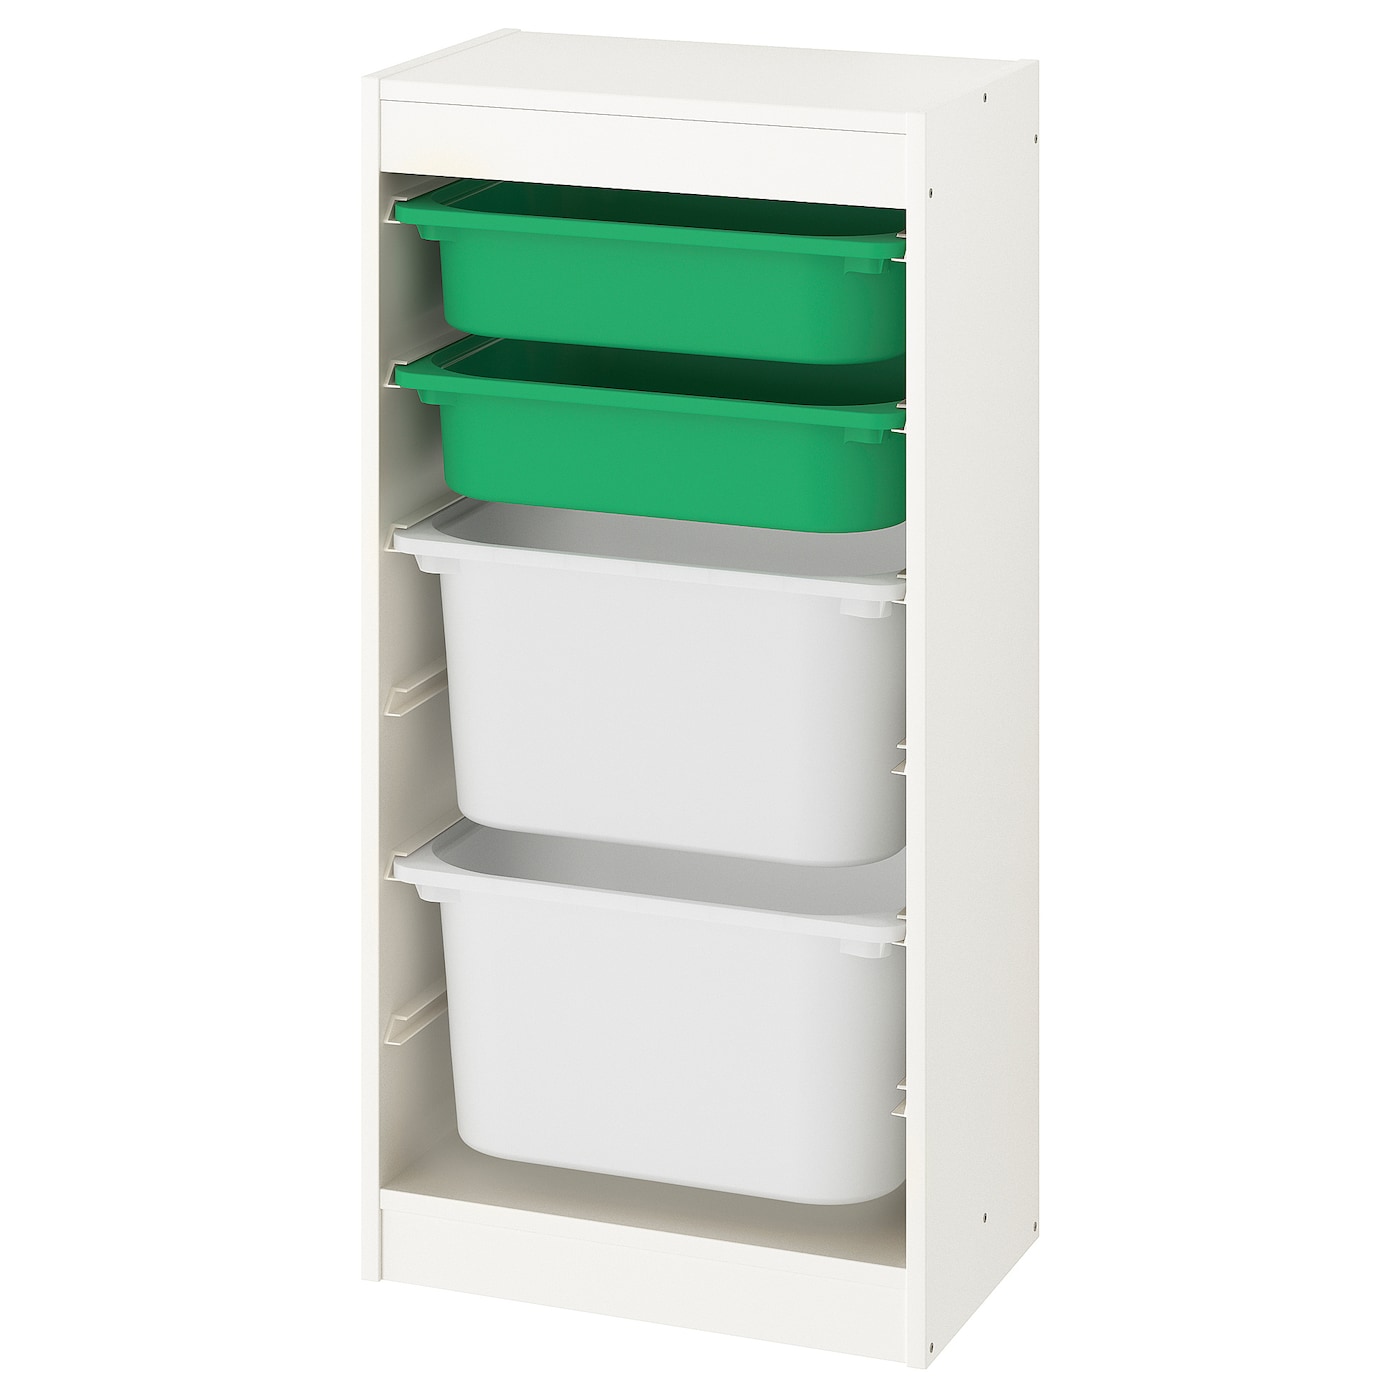 Стеллаж - IKEA TROFAST, 46х30х94 см, белый/зеленый, ТРУФАСТ ИКЕА